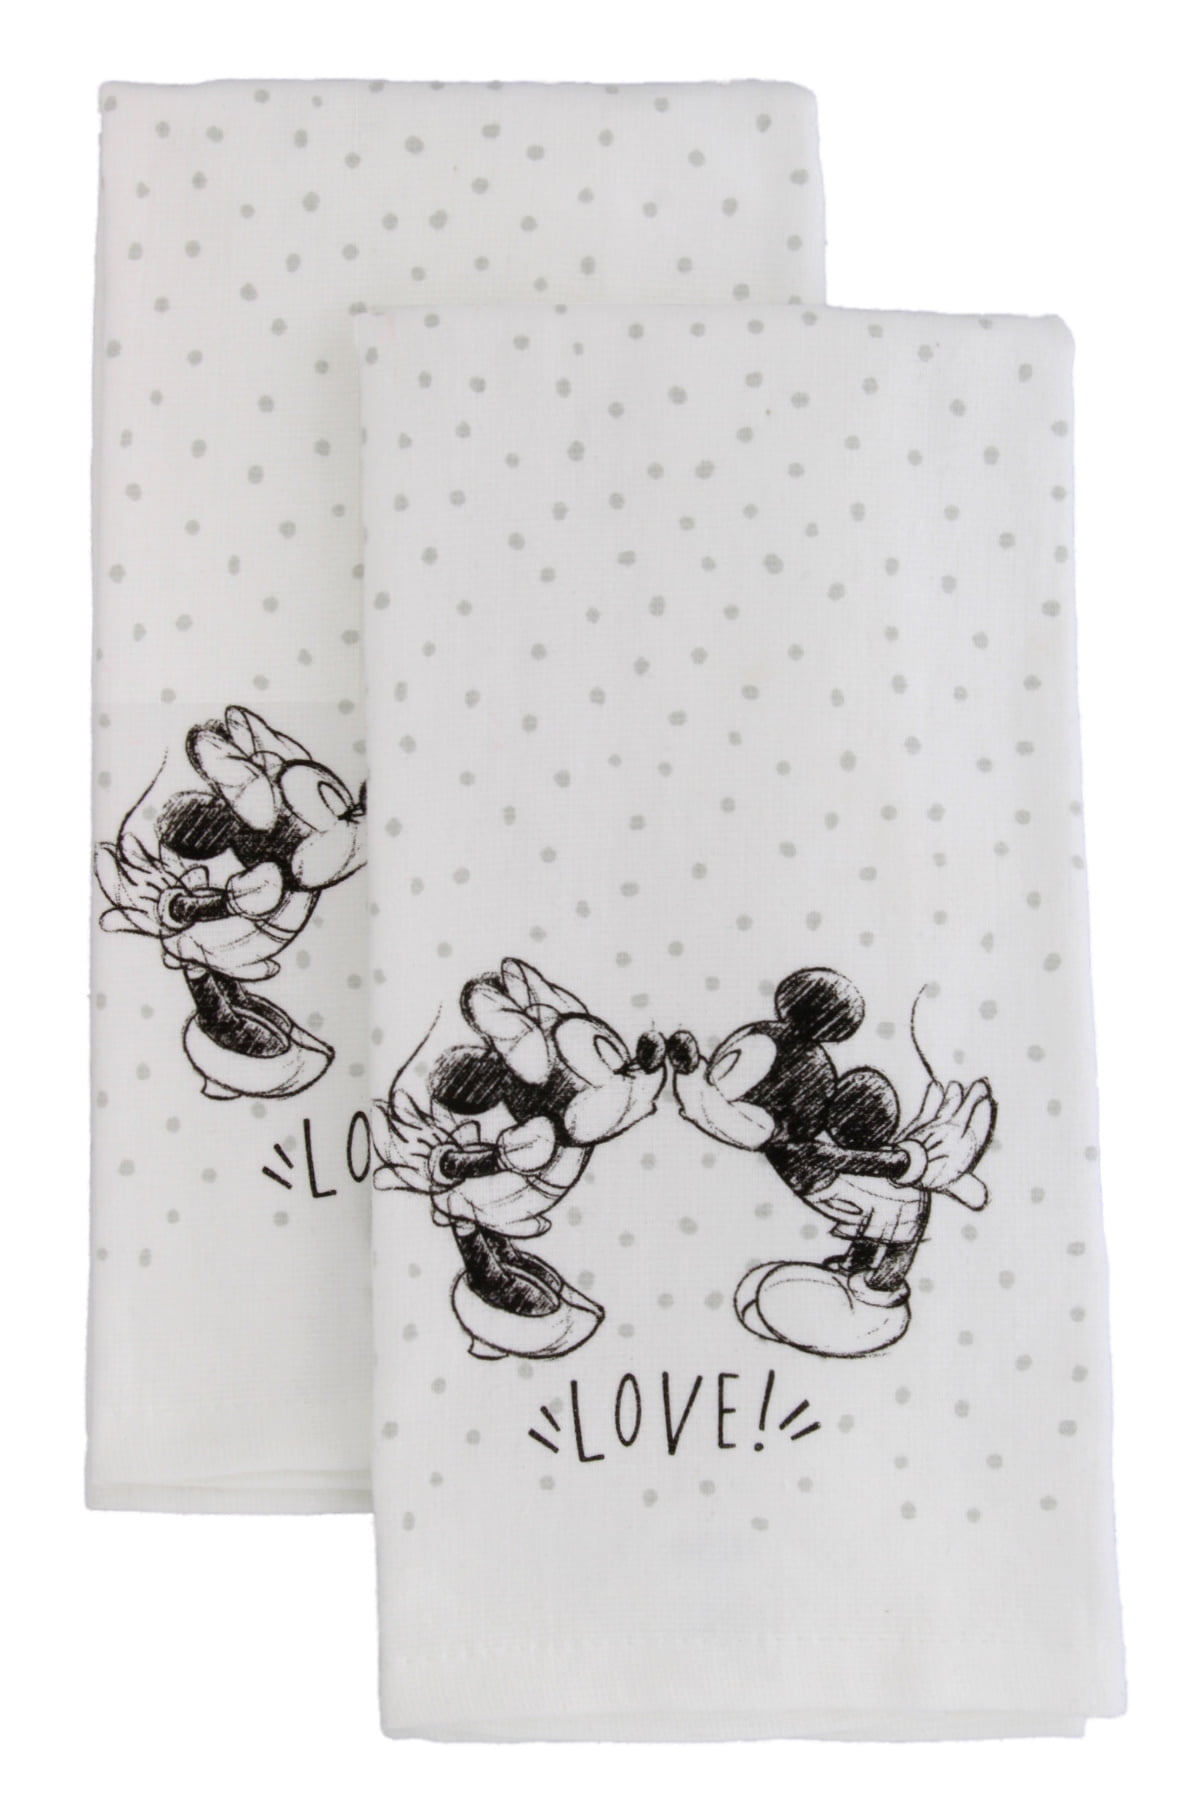 Disney Cotton Kitchen Towels, 2pk, 16 x 28 Inches - Mickey & Minnie Love, White